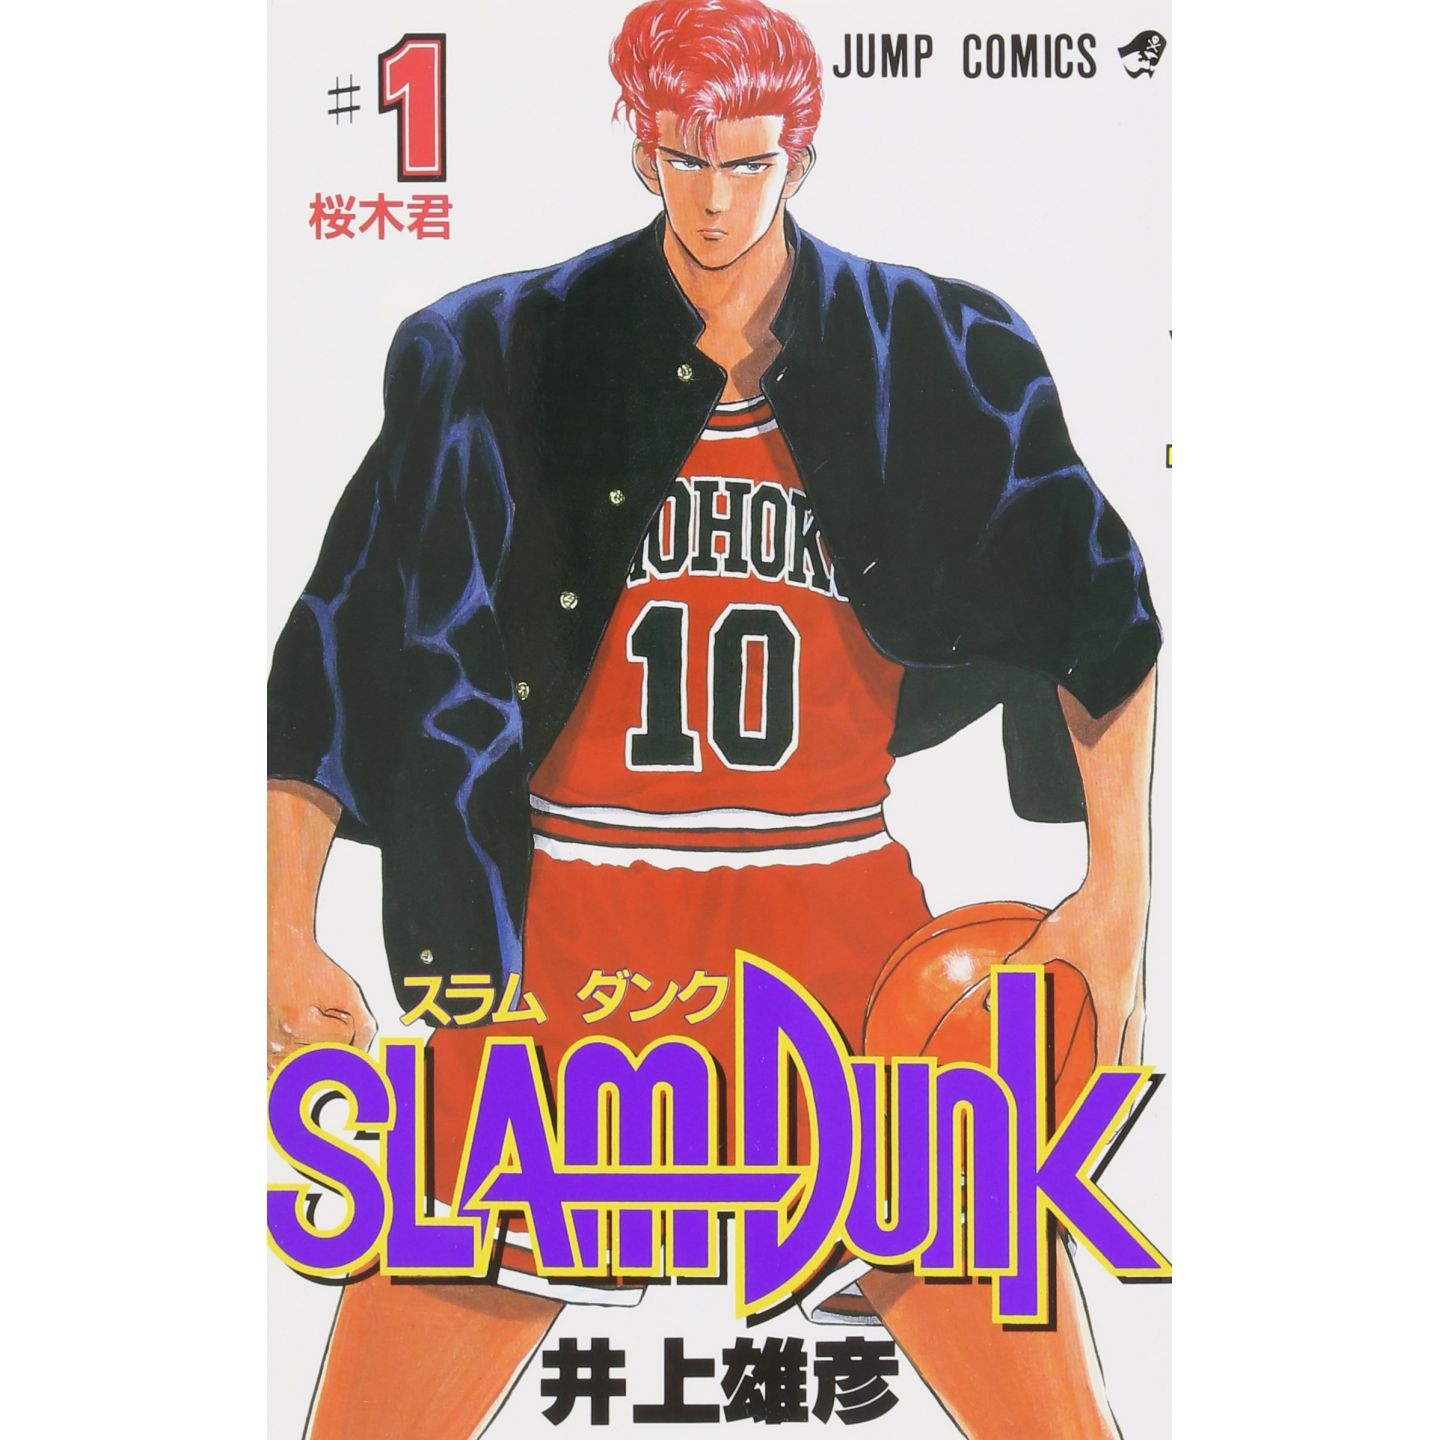 M/G Slam dunk 全31巻(湘北高校バスケットボール部) - 漫画